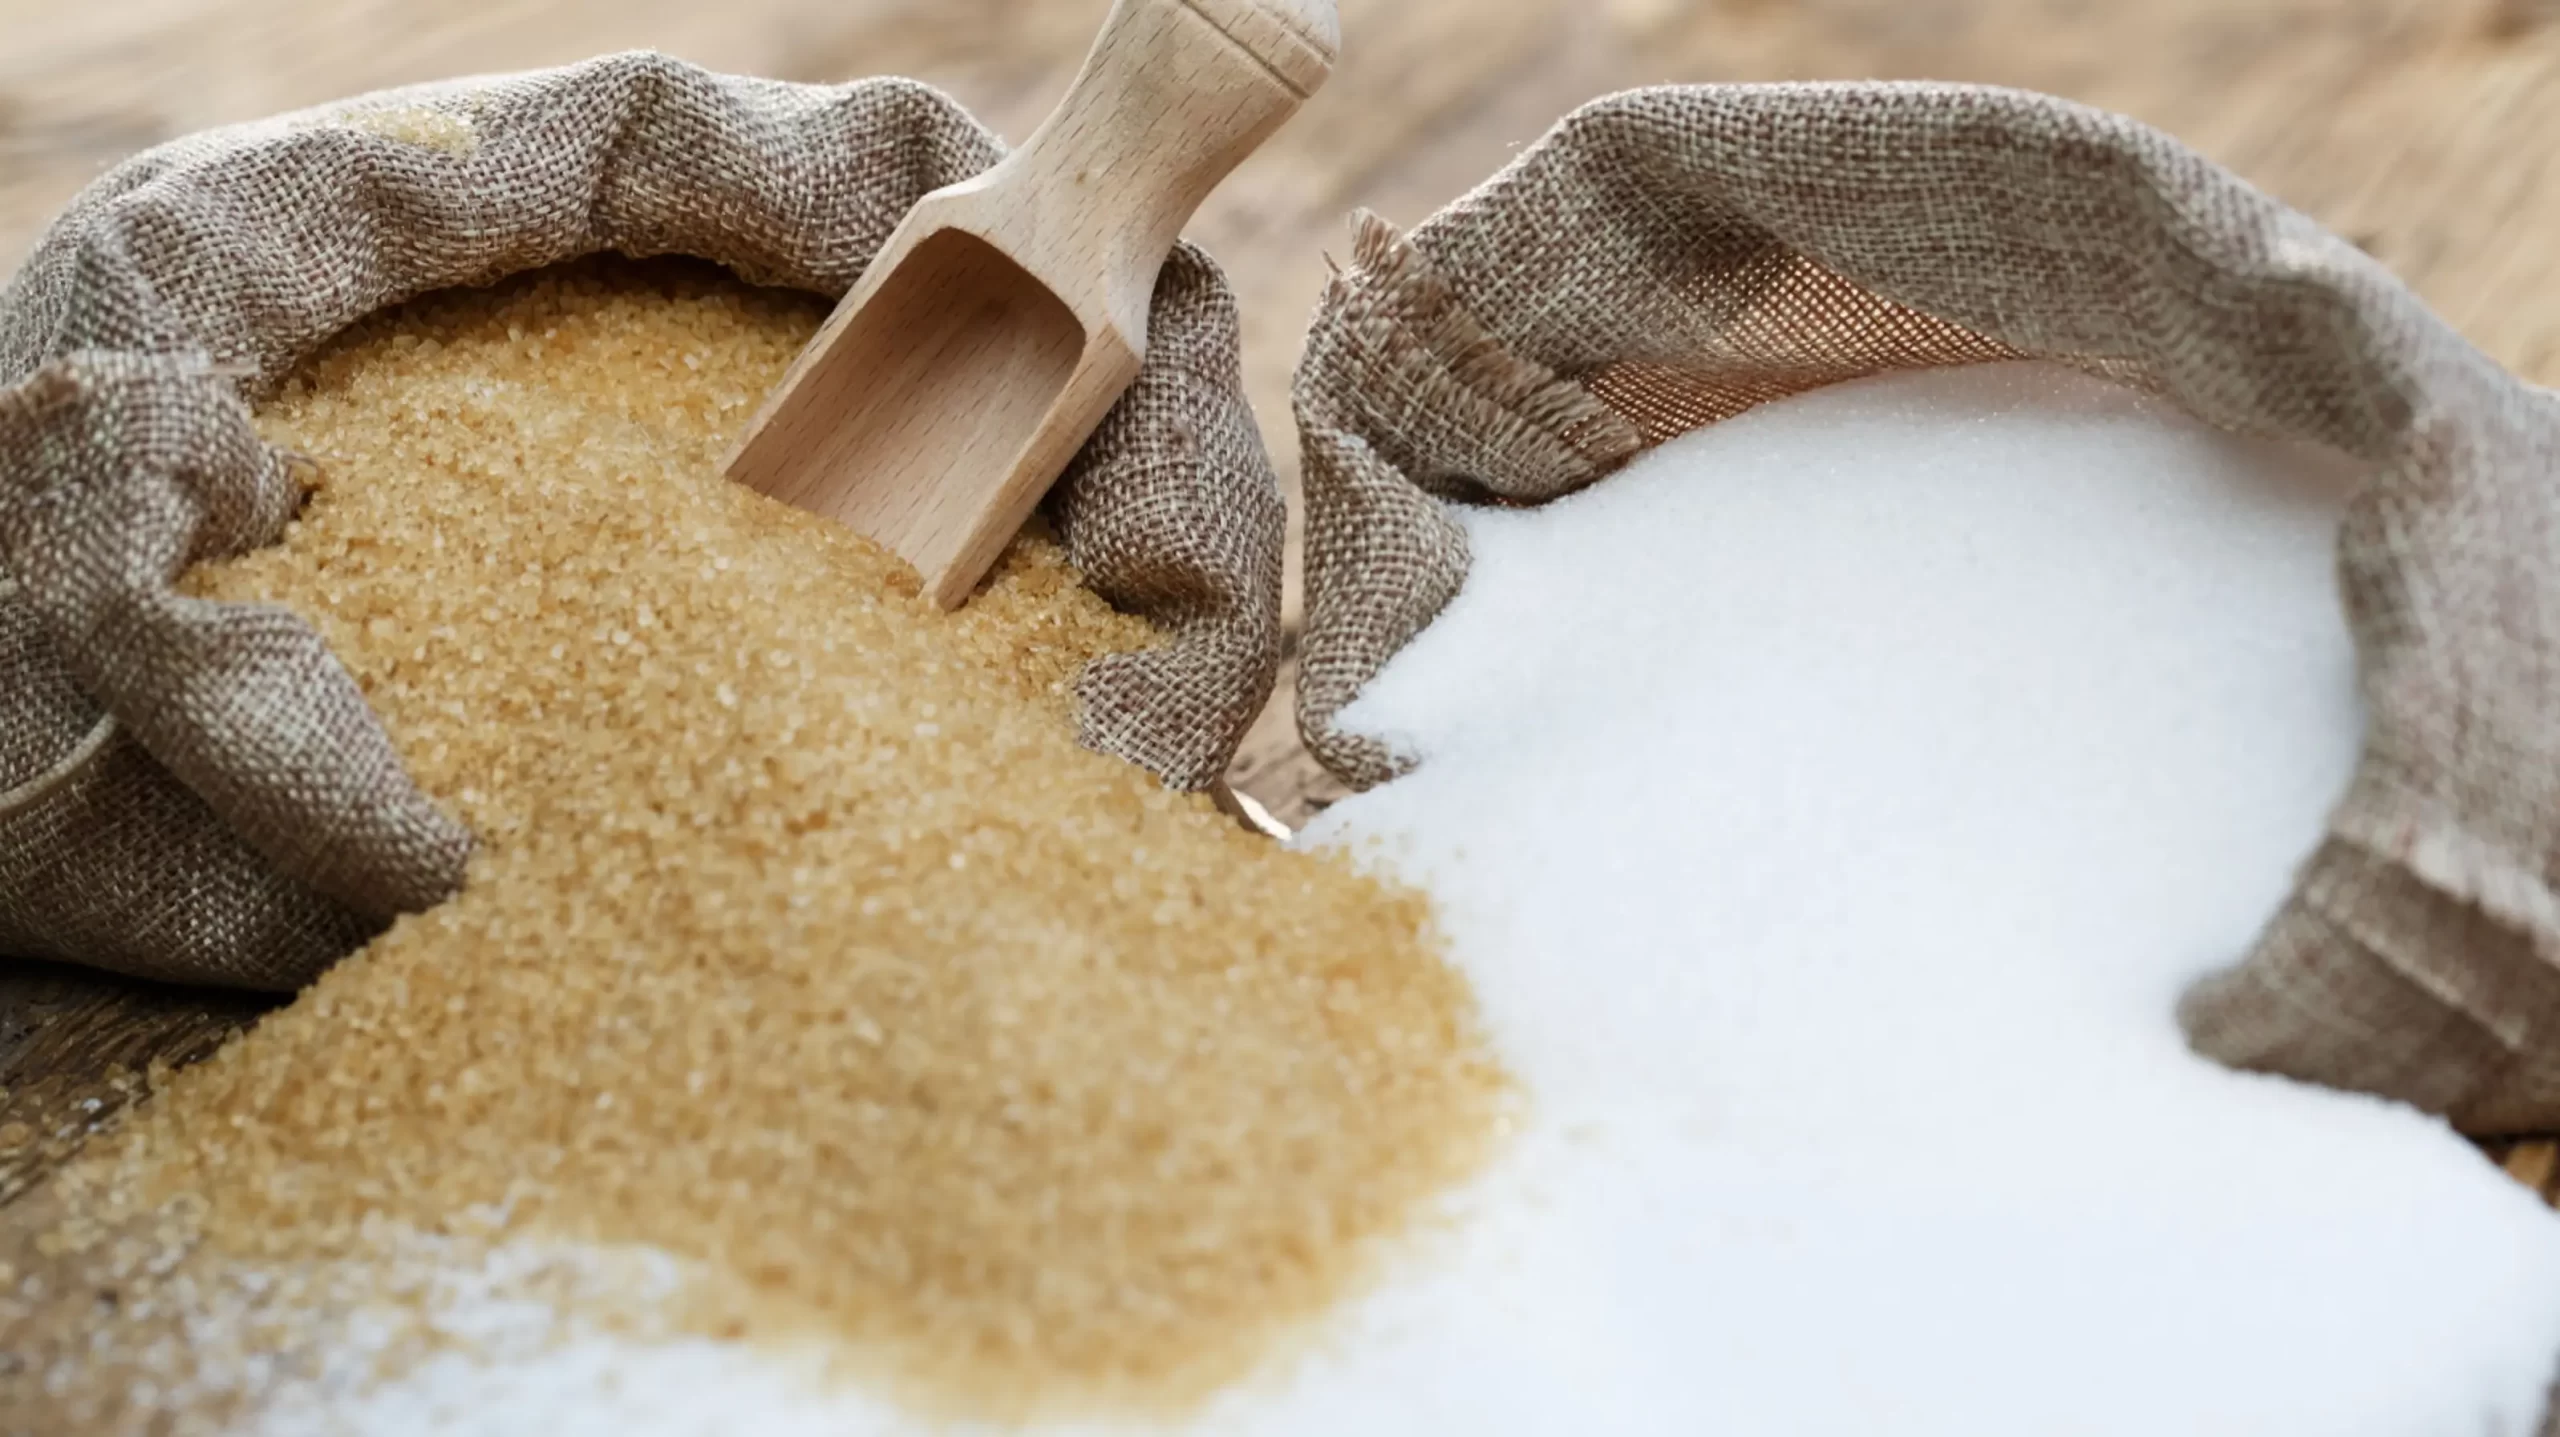 Similarities between brown sugar and white sugar